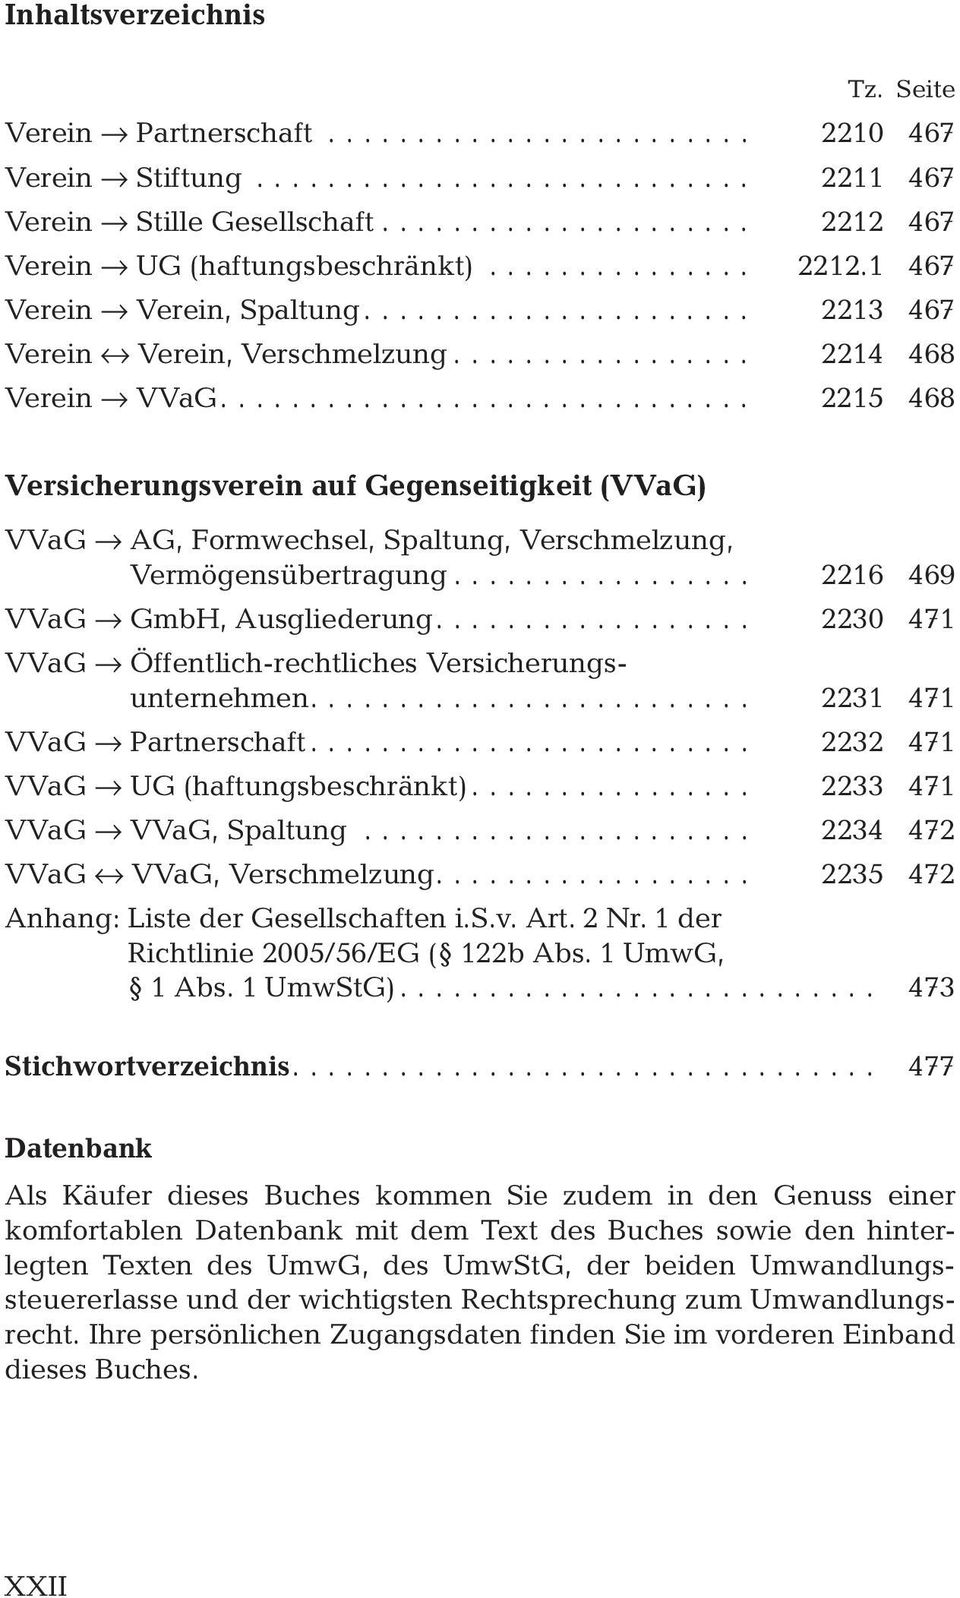 .. 2216 469 VVaG fi GmbH, Ausgliederung.... 2230 471 VVaG fi Öffentlich-rechtliches Versicherungsunternehmen.... 2231 471 VVaG fi Partnerschaft... 2232 471 VVaG fi UG (haftungsbeschränkt).